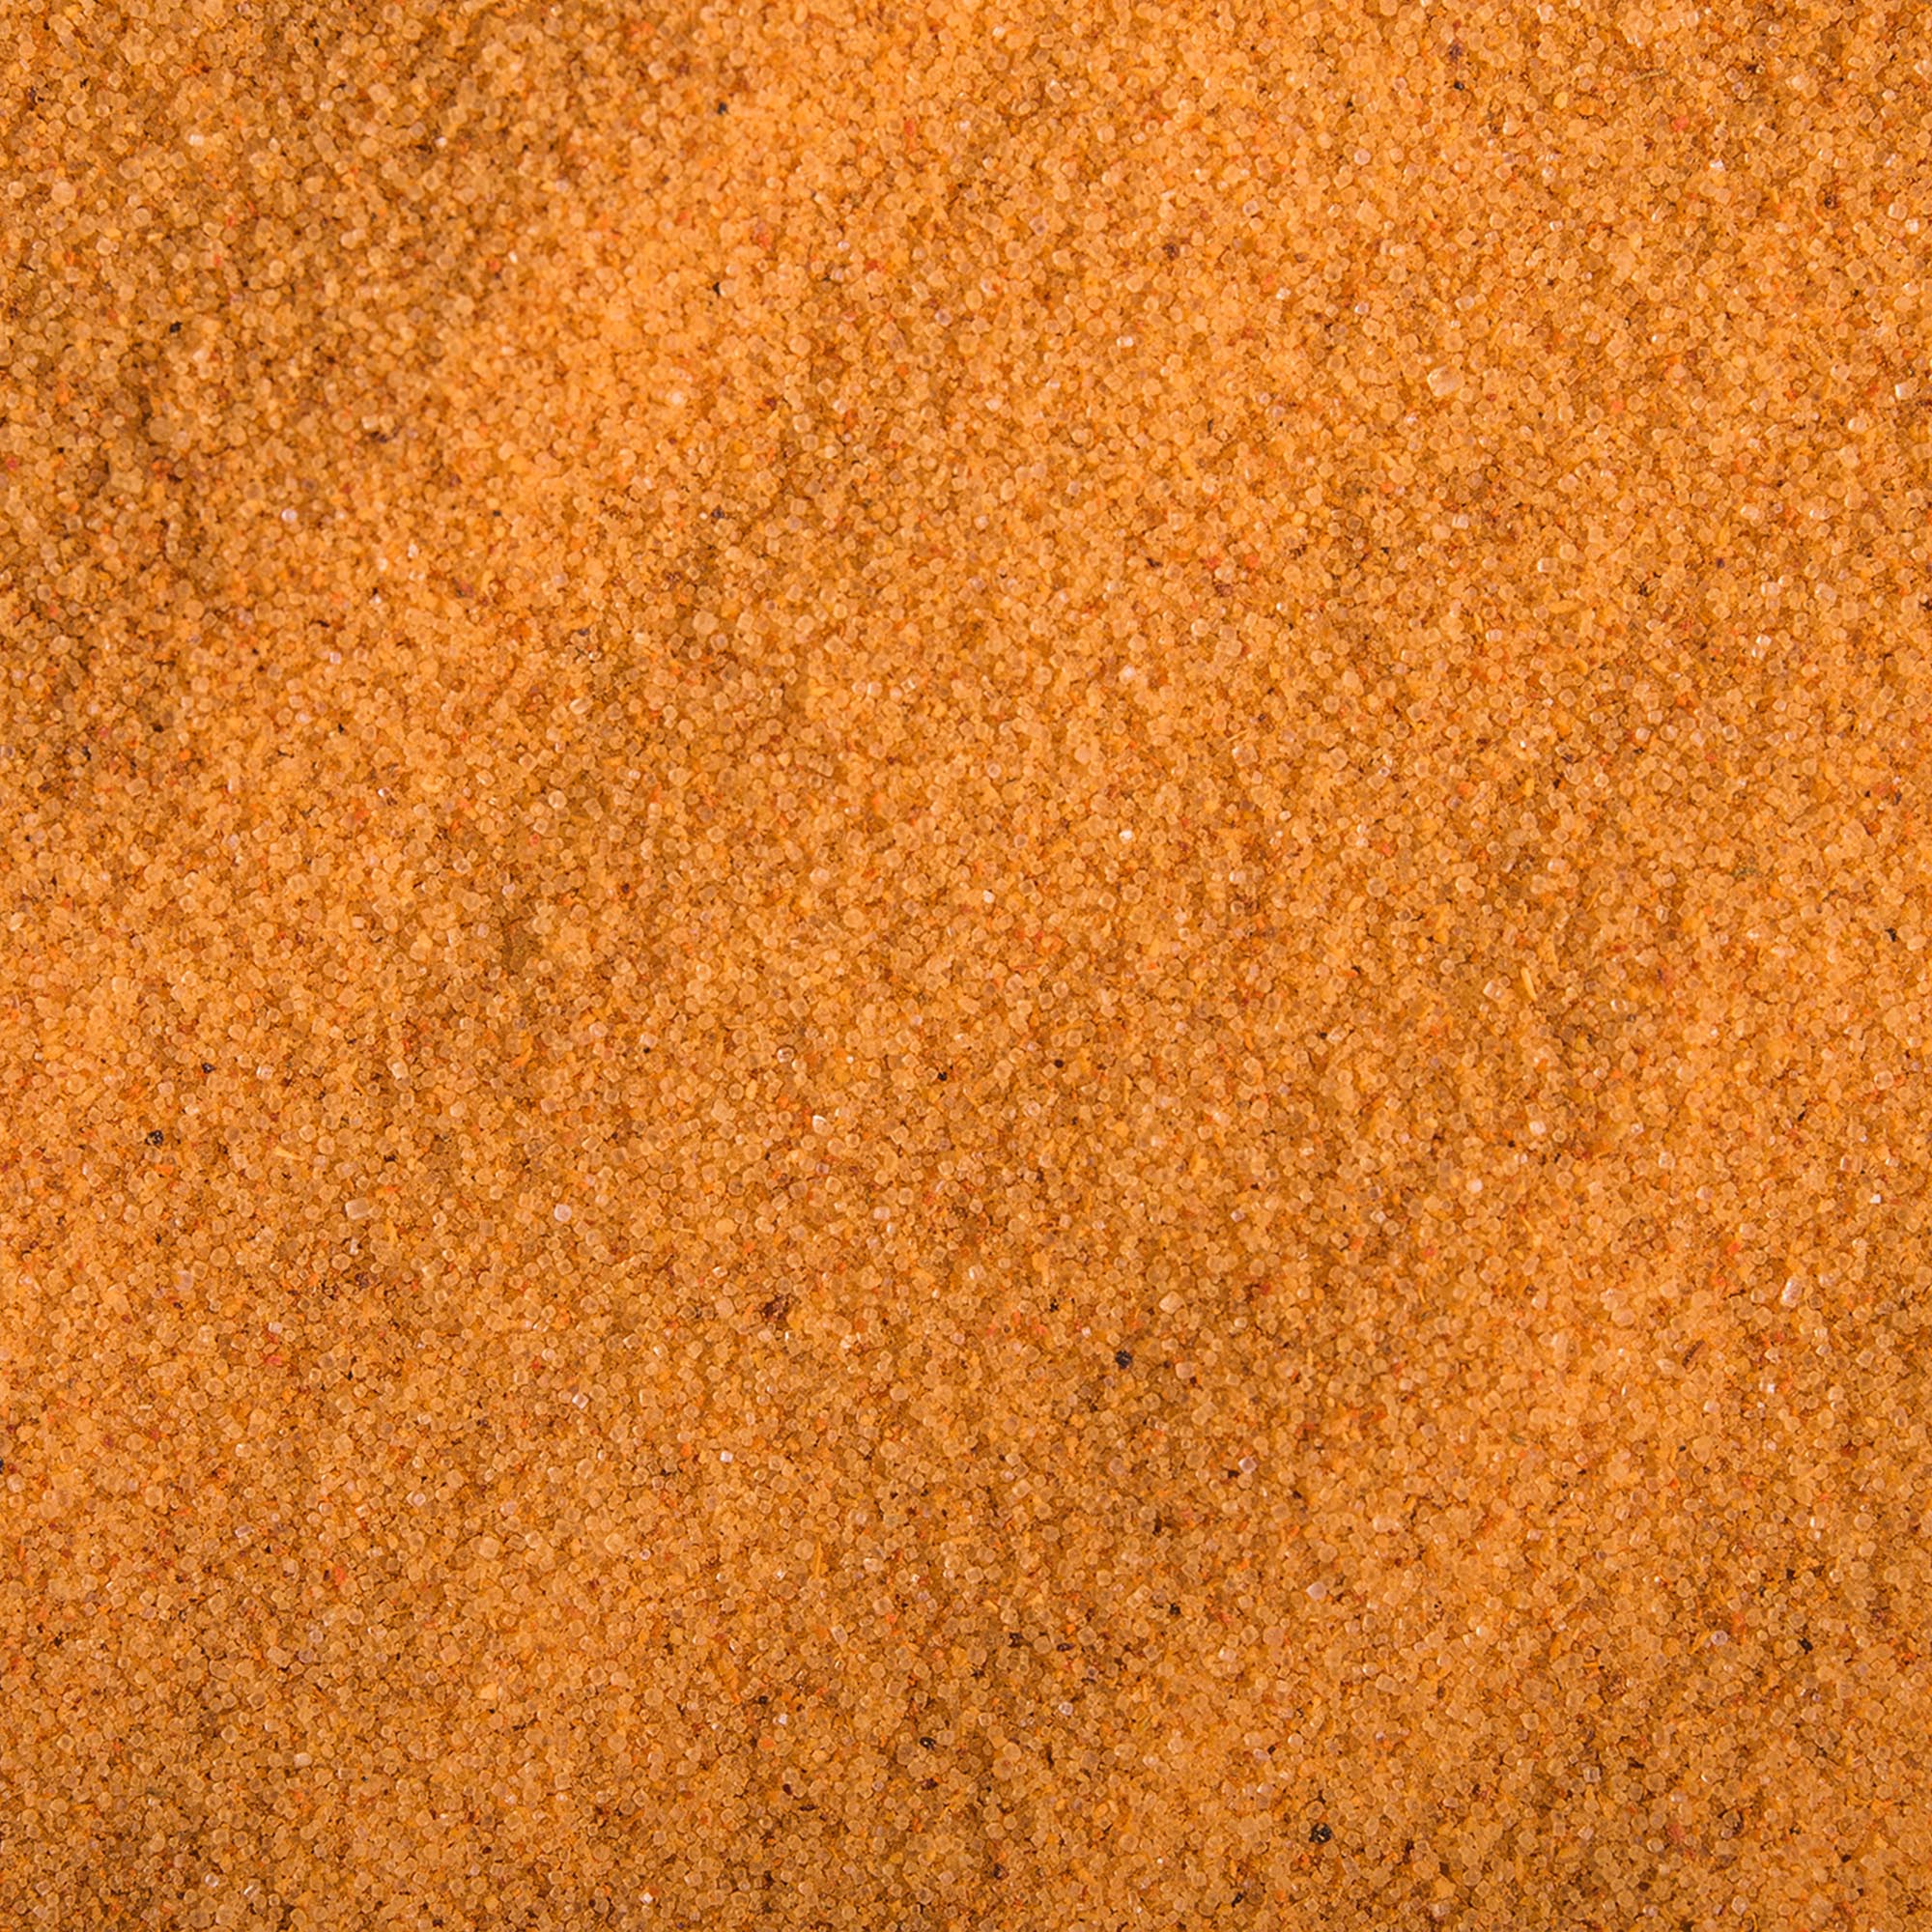 Lawry's Economy Size Seasoned Salt, 16 oz Mixed Spices & Seasonings - image 3 of 12